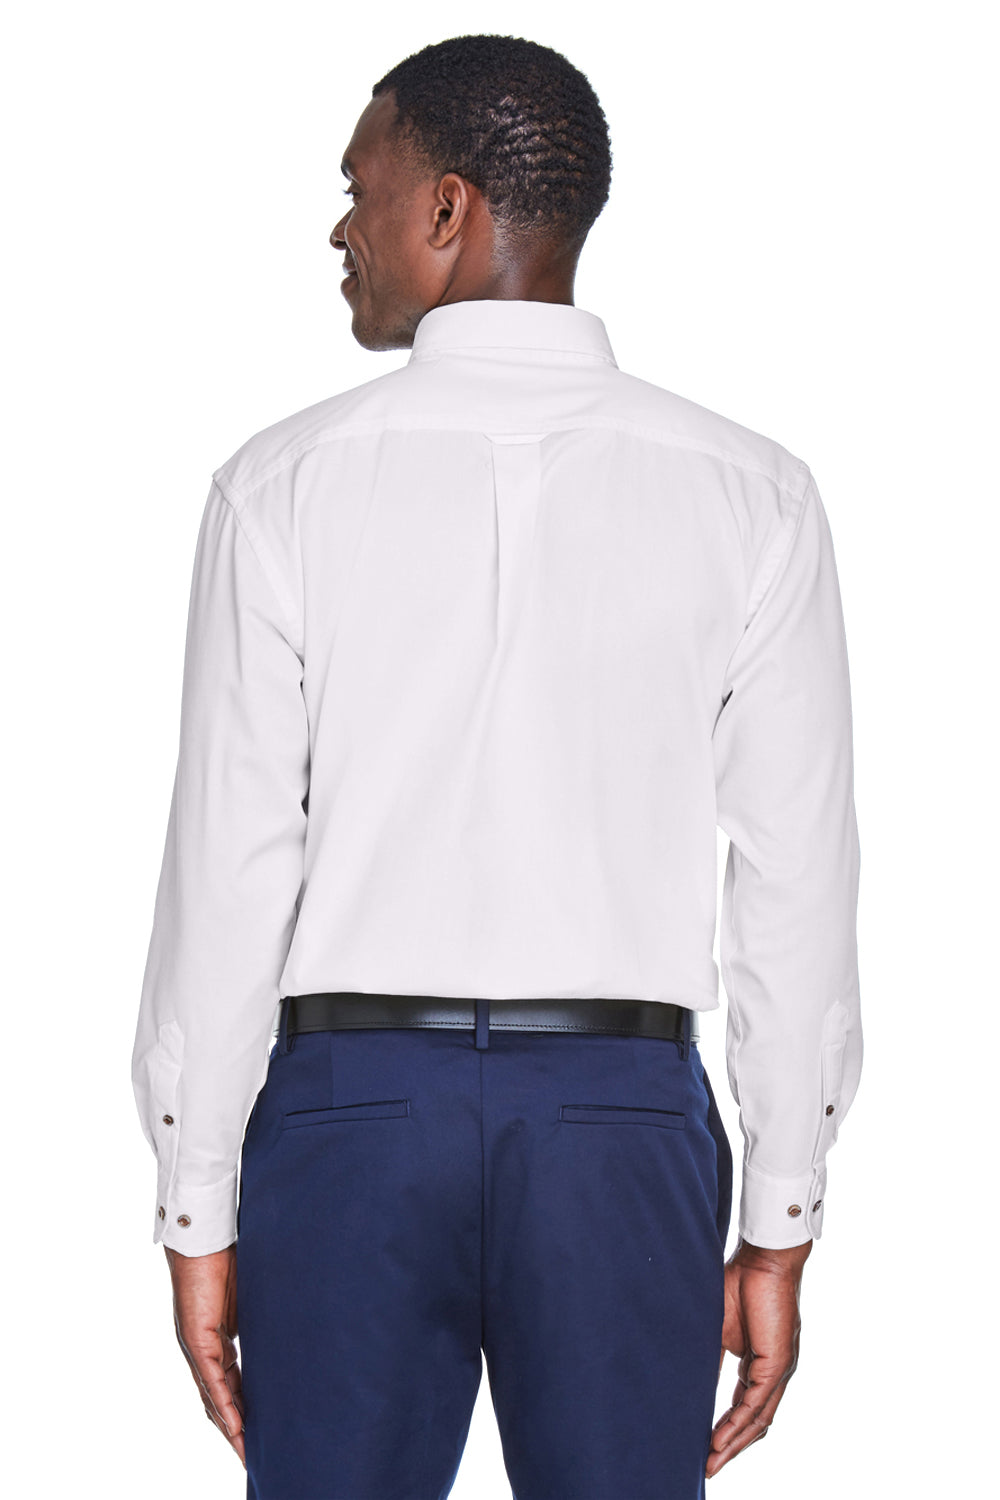 Harriton M500 Mens Wrinkle Resistant Long Sleeve Button Down Shirt w/ Pocket White Back